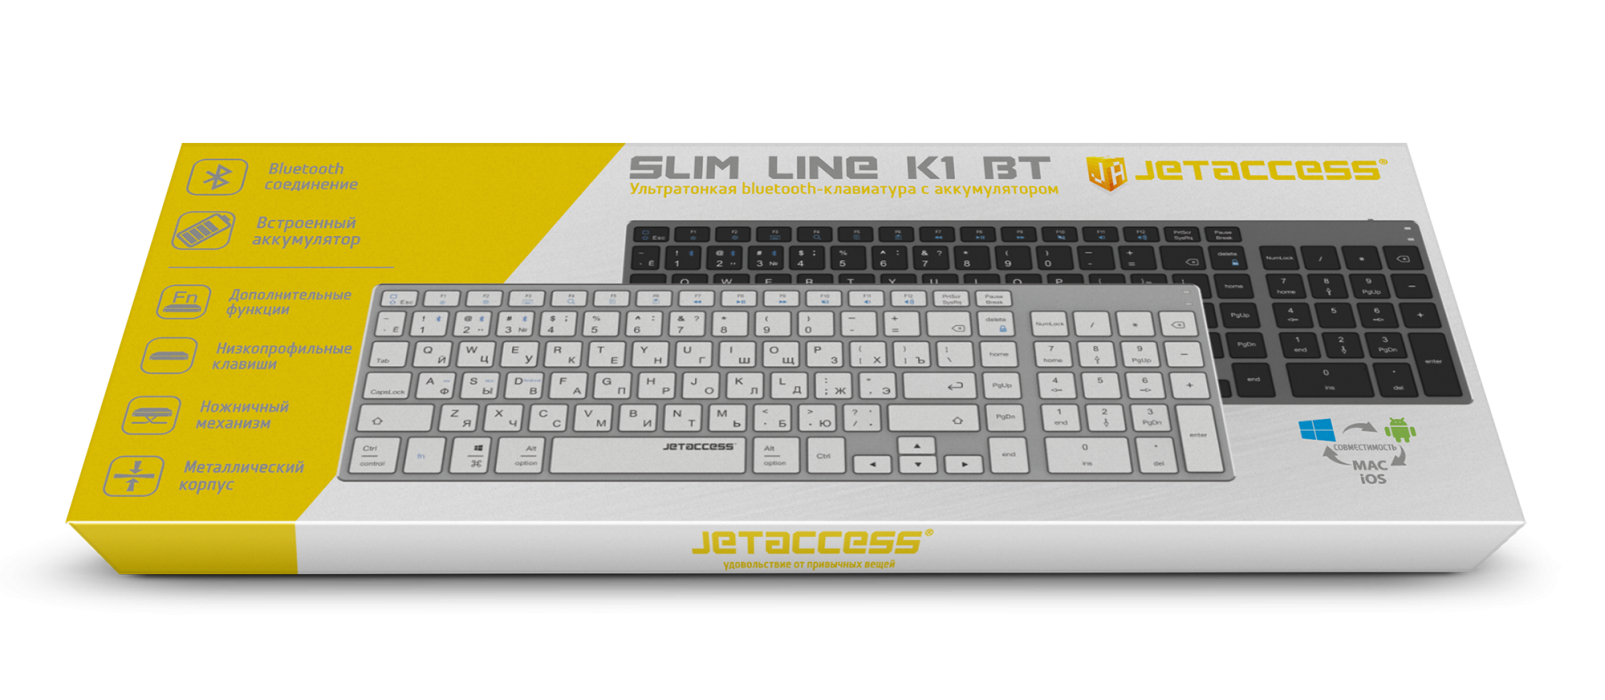 Ультратонкая bluetooth-клавиатура с аккумулятором SLIM LINE K1 BT6